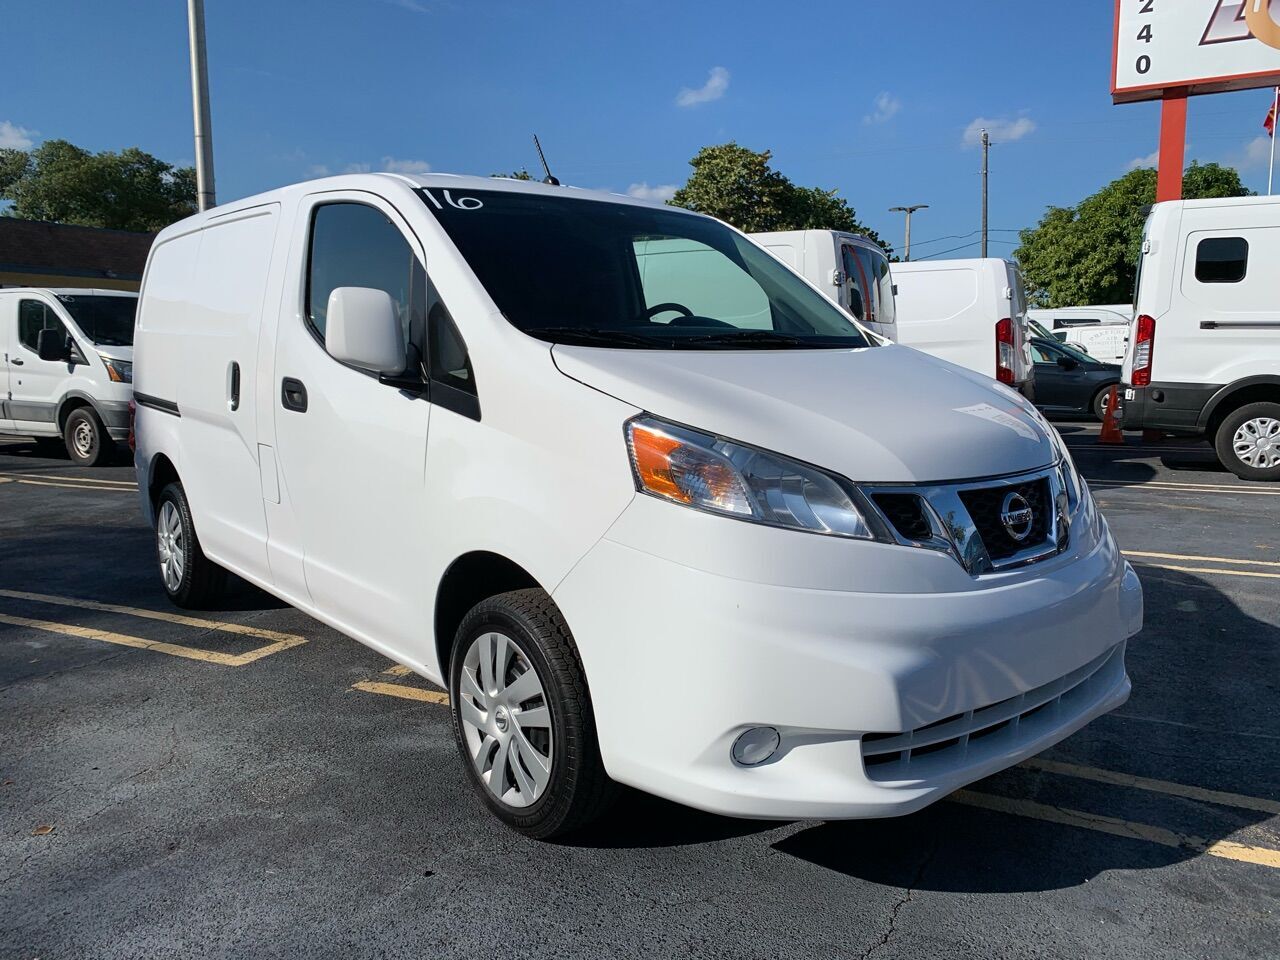 Vans For Sale - Carsforsale.com®